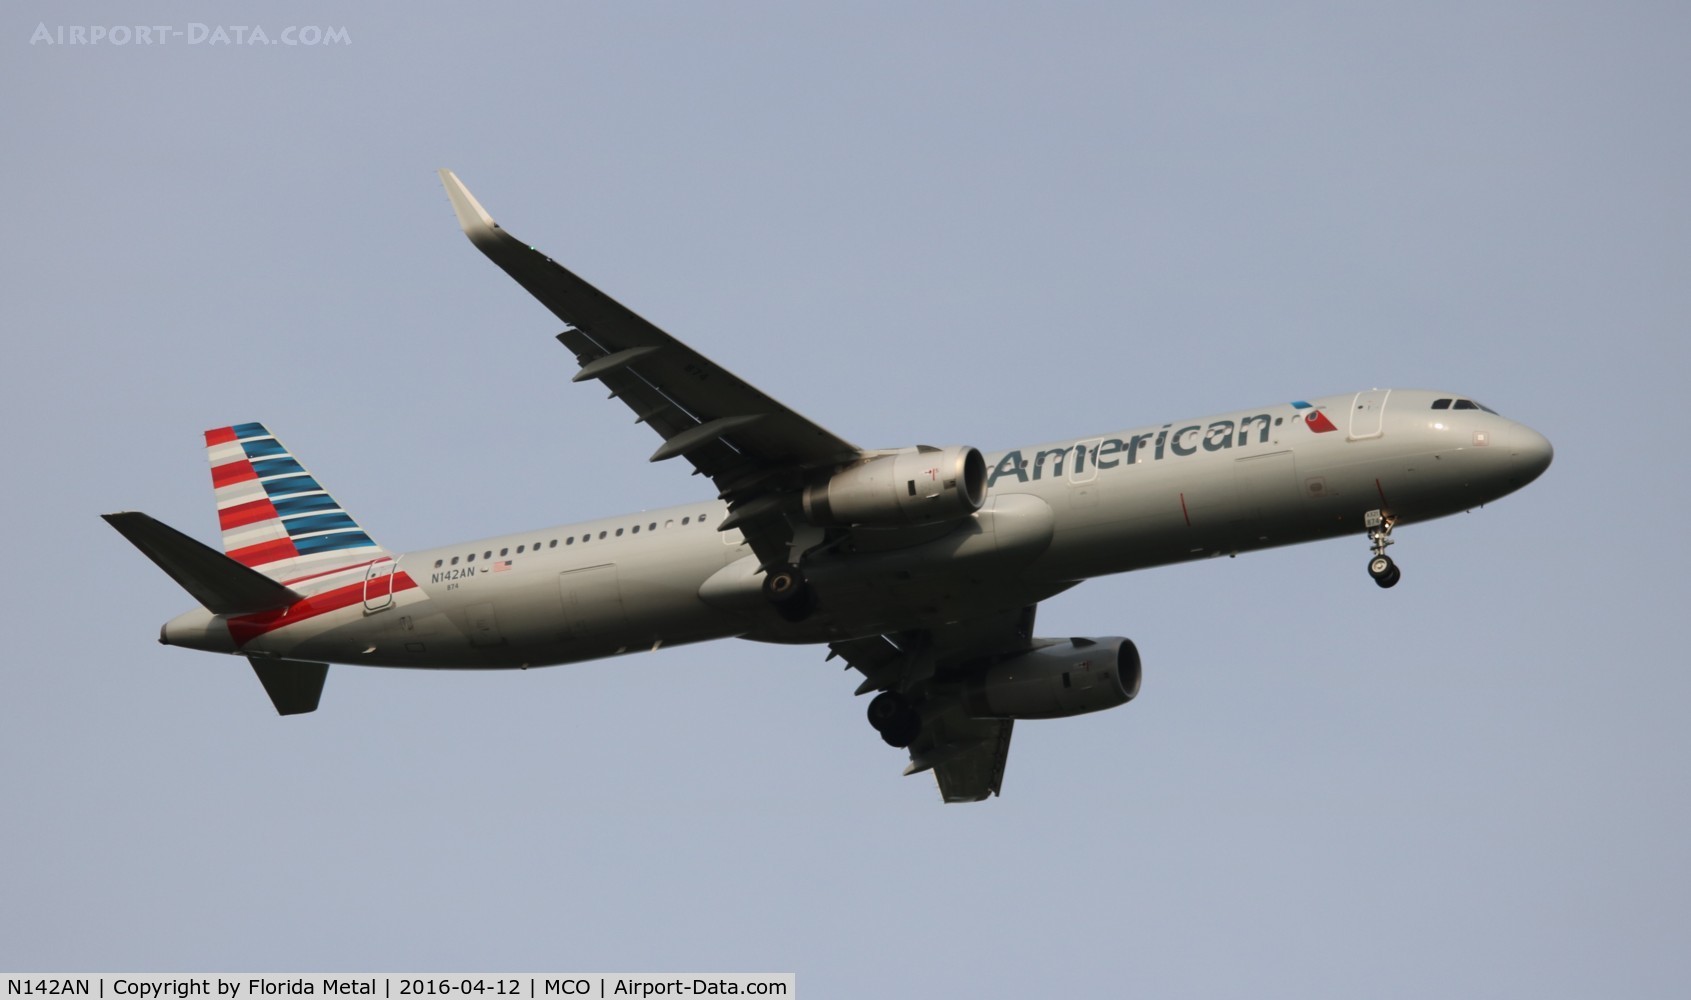 N142AN, 2015 Airbus A321-231 C/N 6711, American